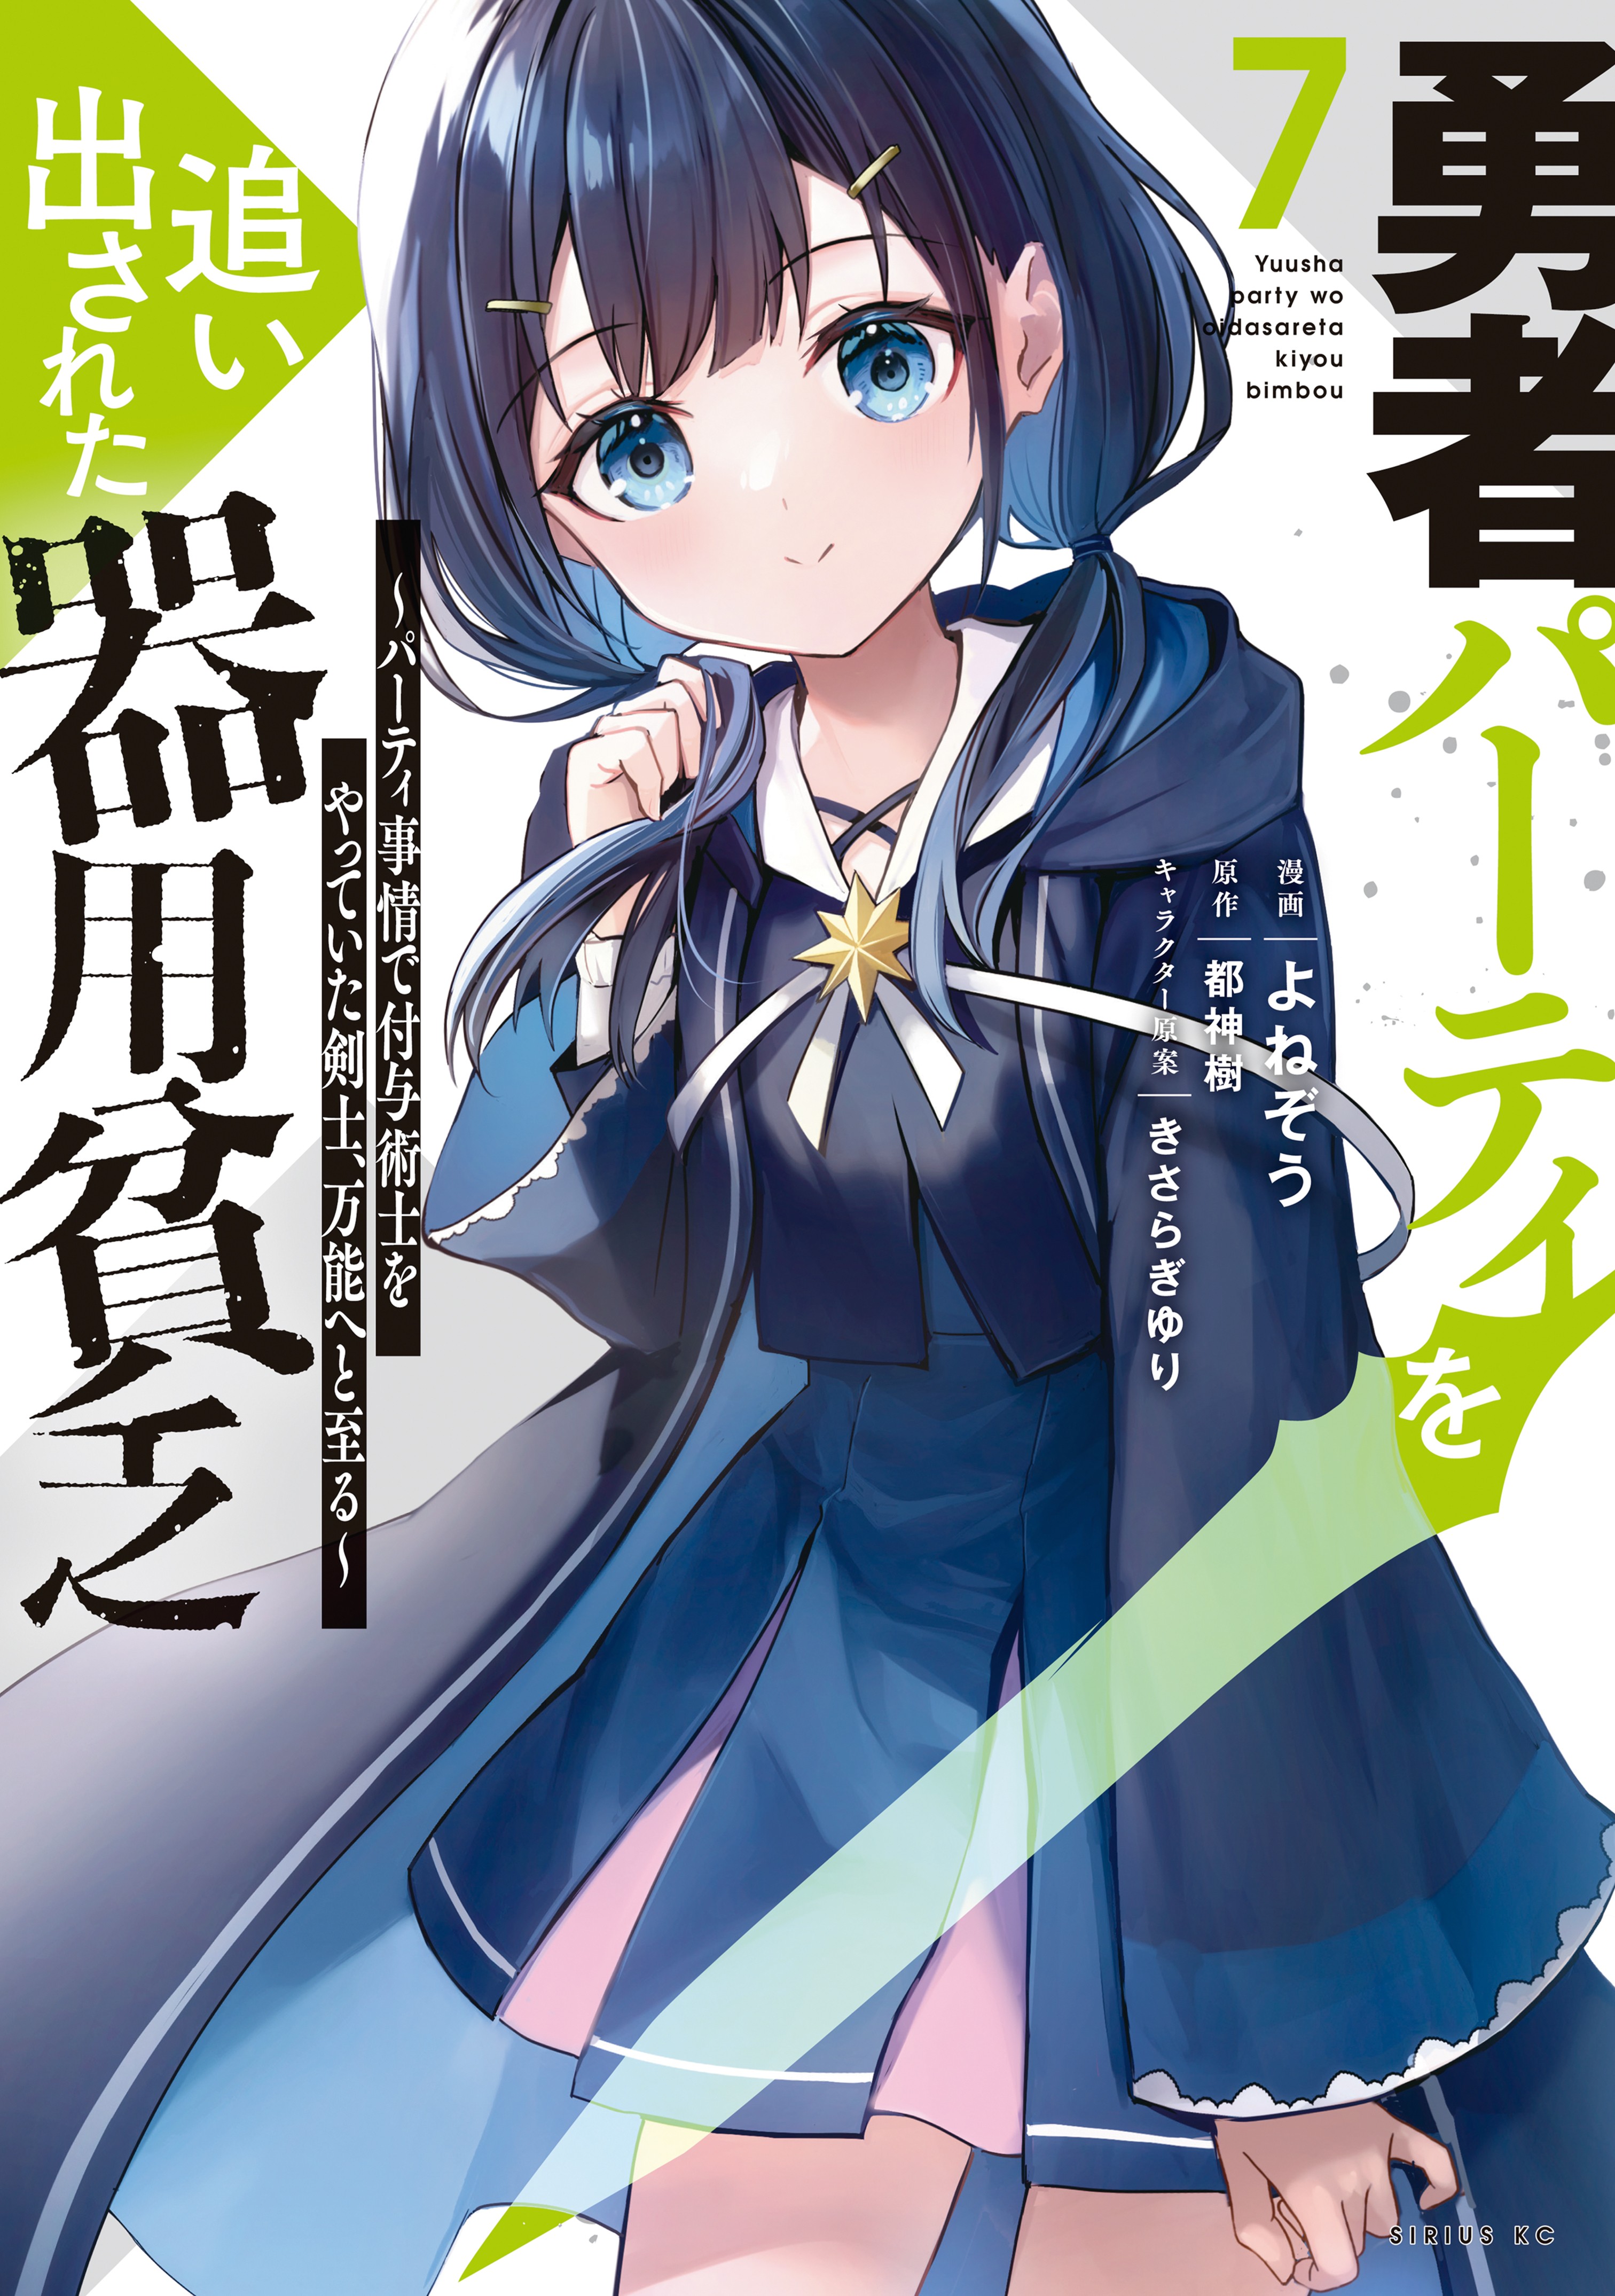 Read Yuusha Party O Oida Sareta Kiyou Binbou Manga English [New Chapters]  Online Free - MangaClash